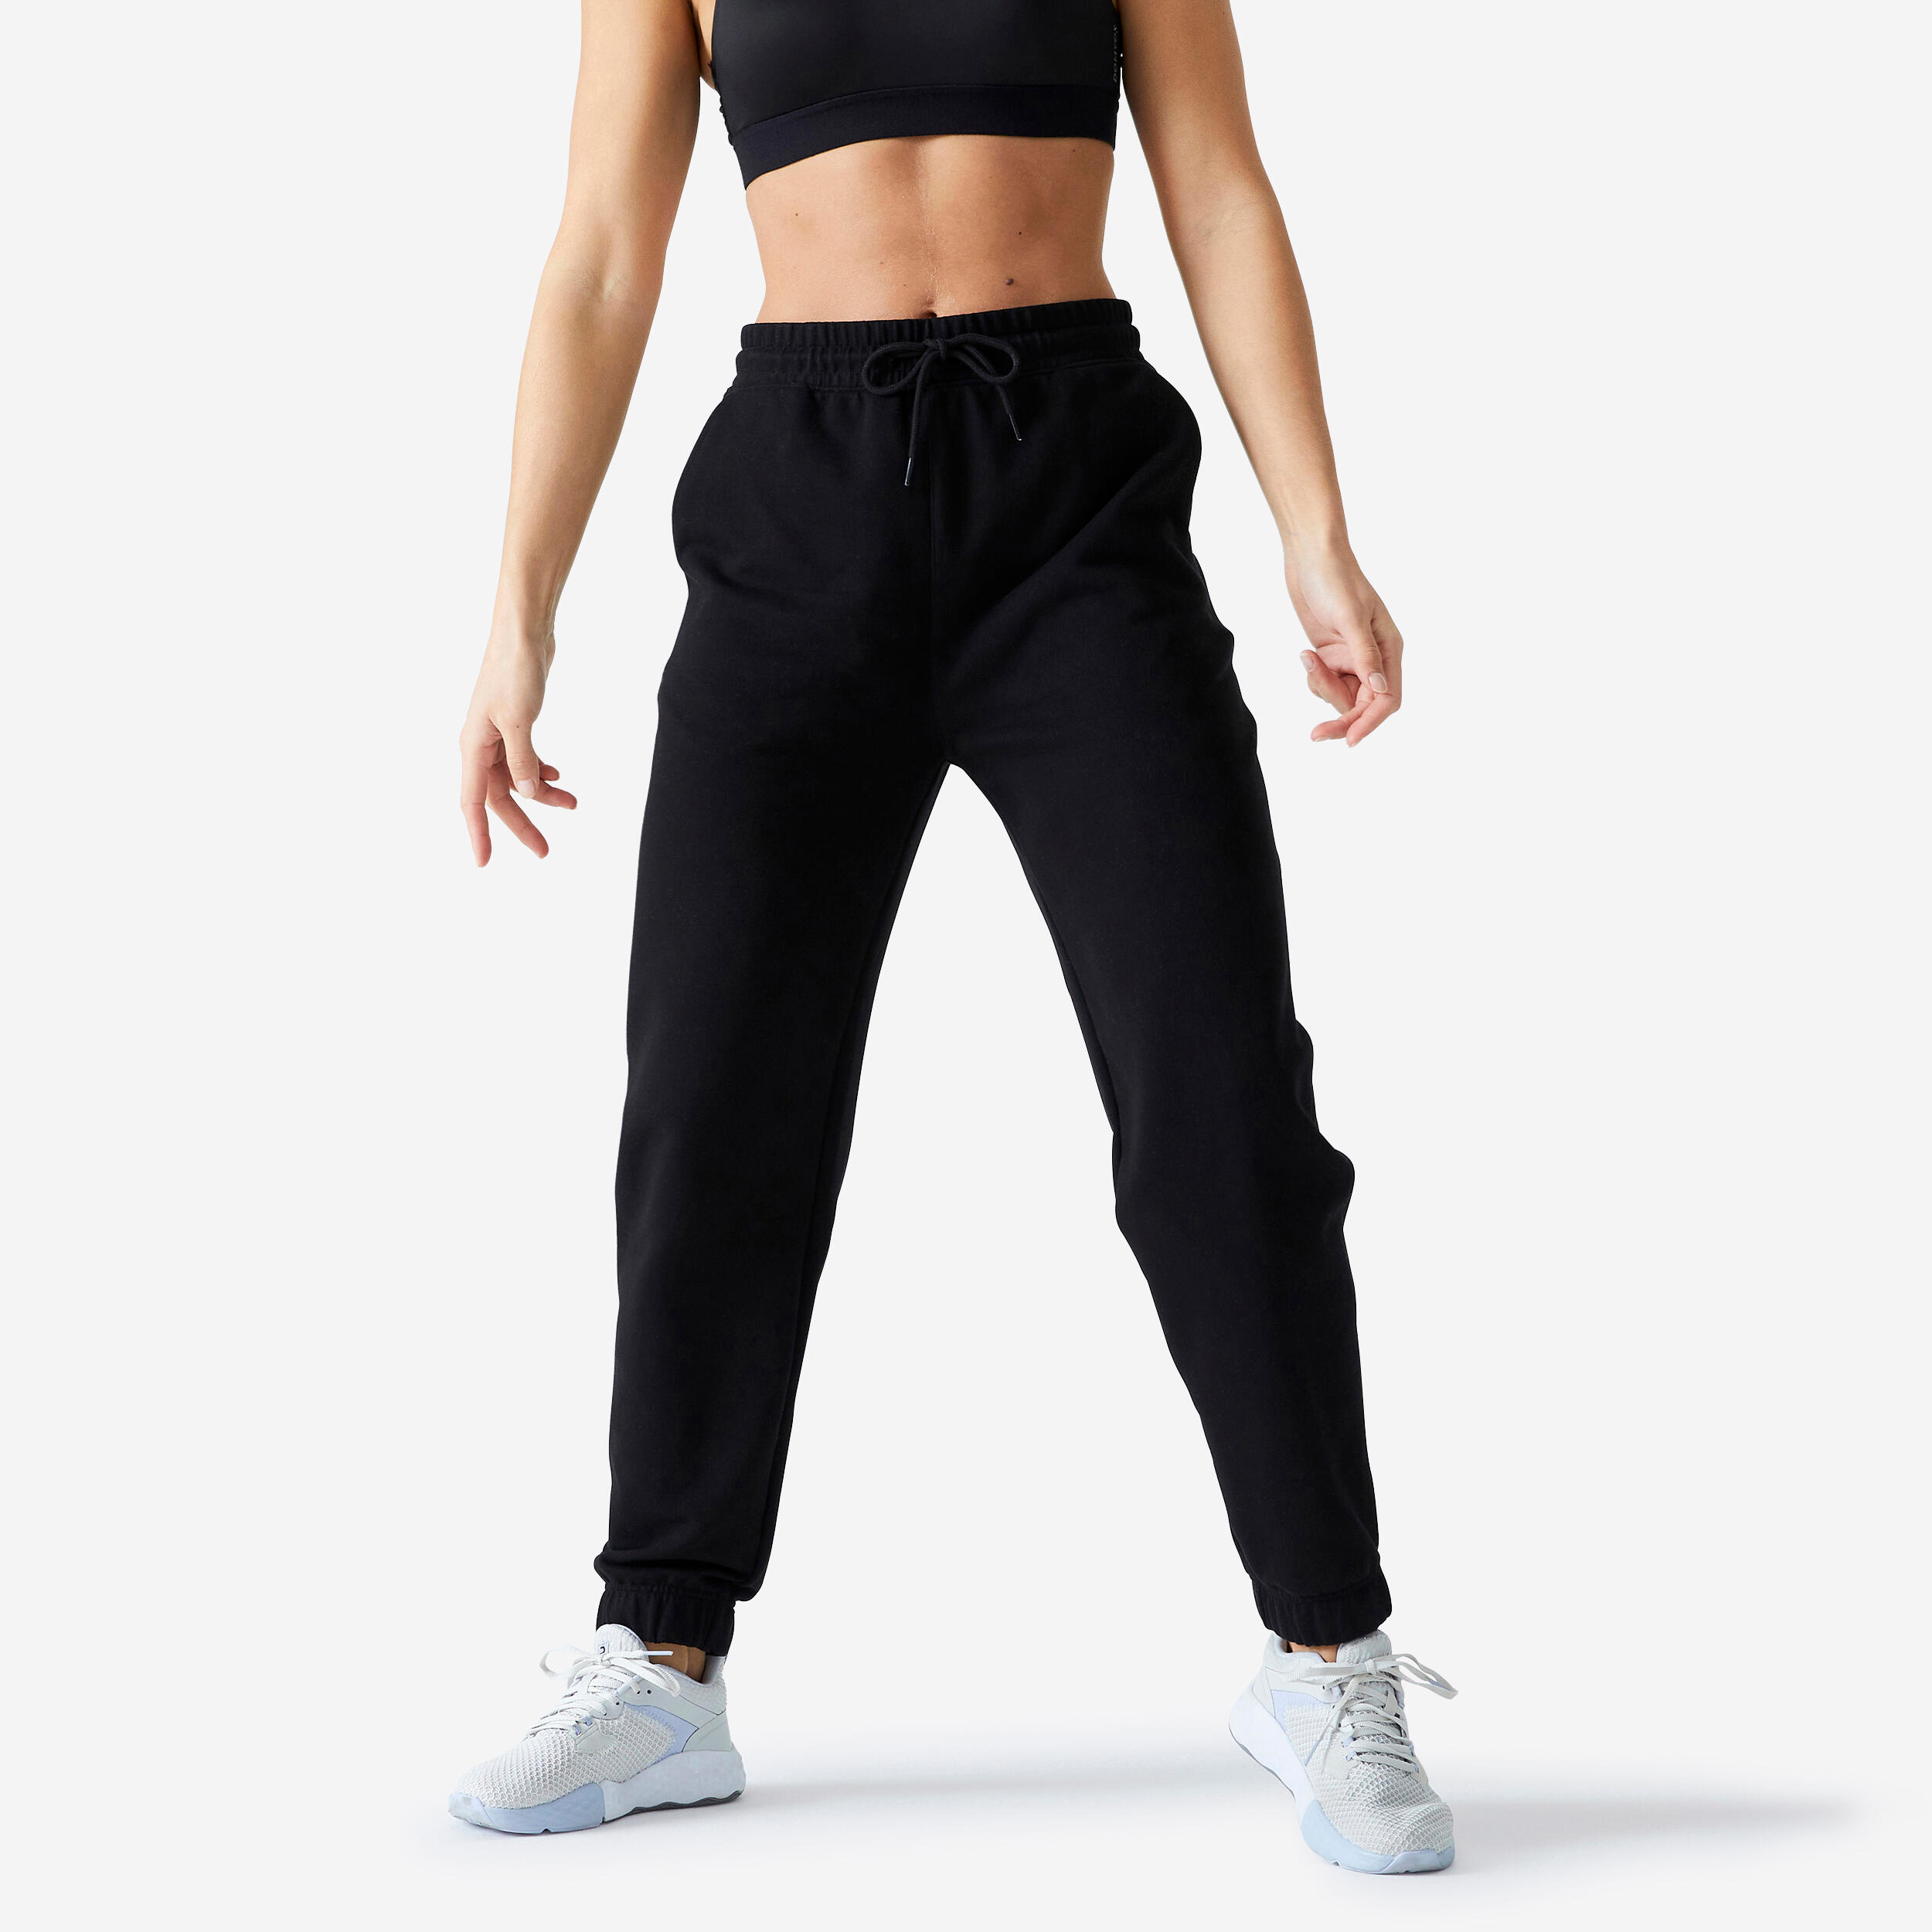 Women’s Medium Support Fitness Sports Bra - 500 Grey/Black